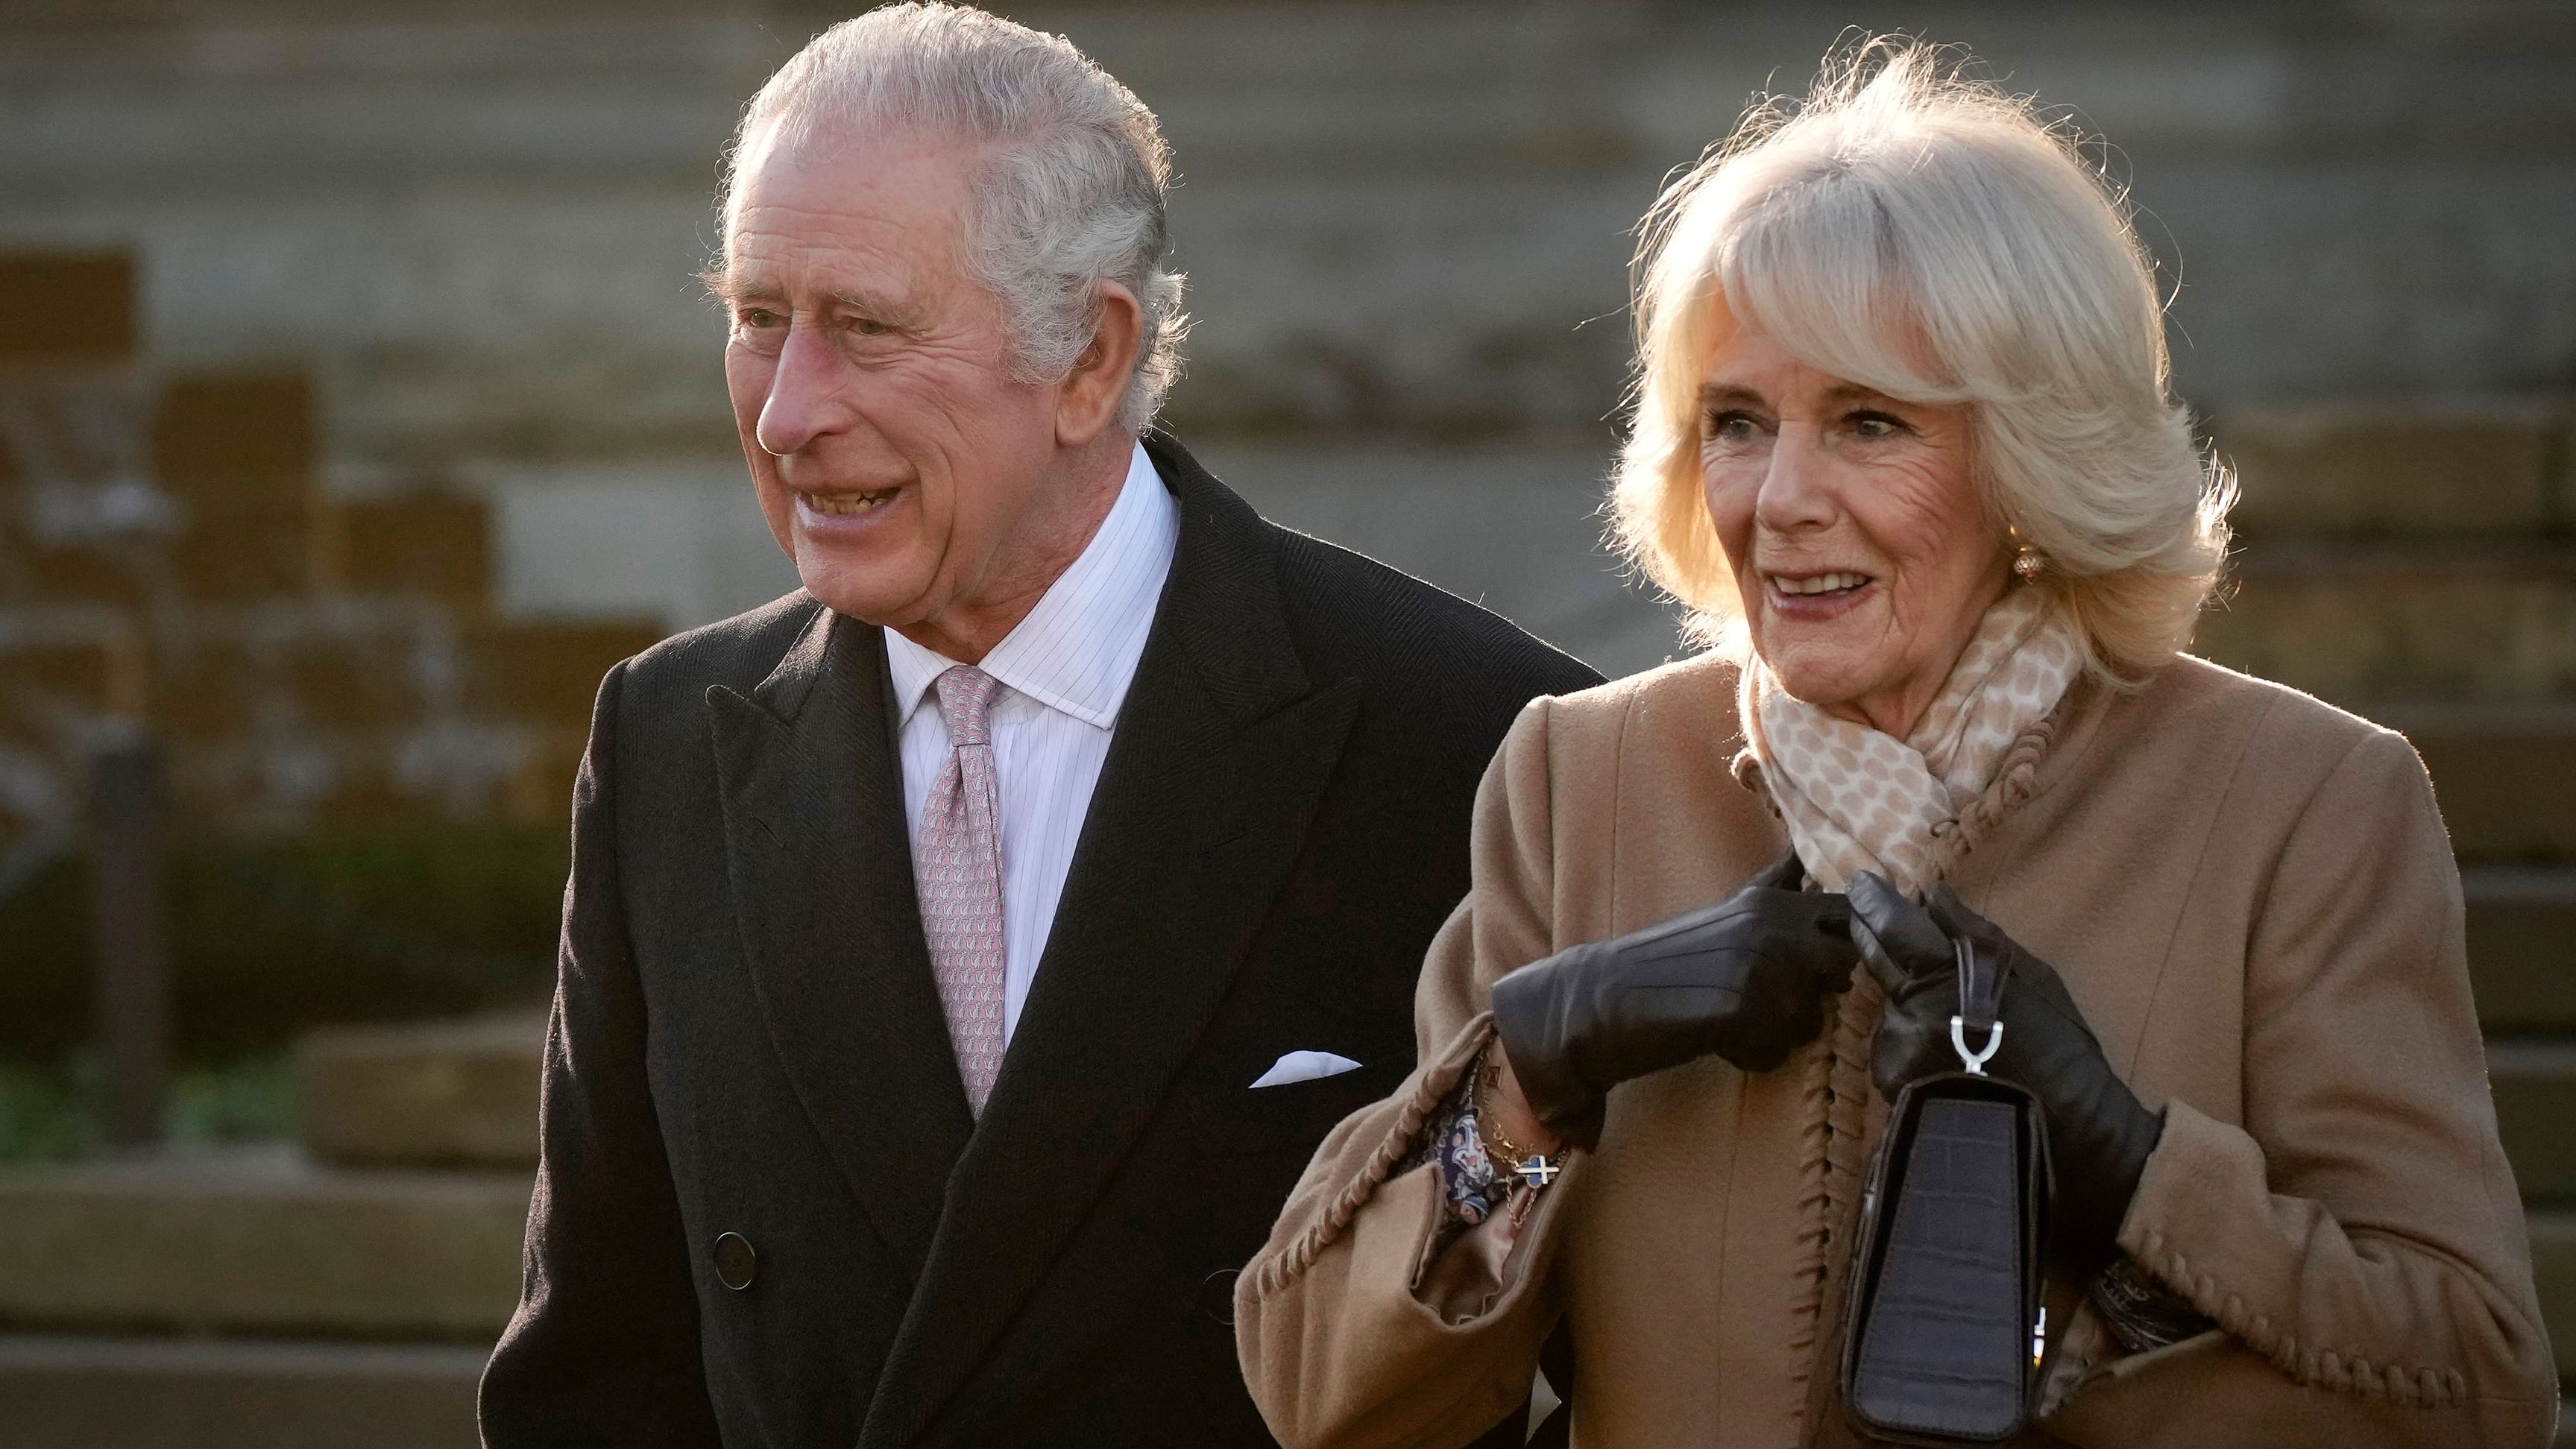 Krebskranker König Charles III.: Was neues Pärchenbild mit Camilla verrät